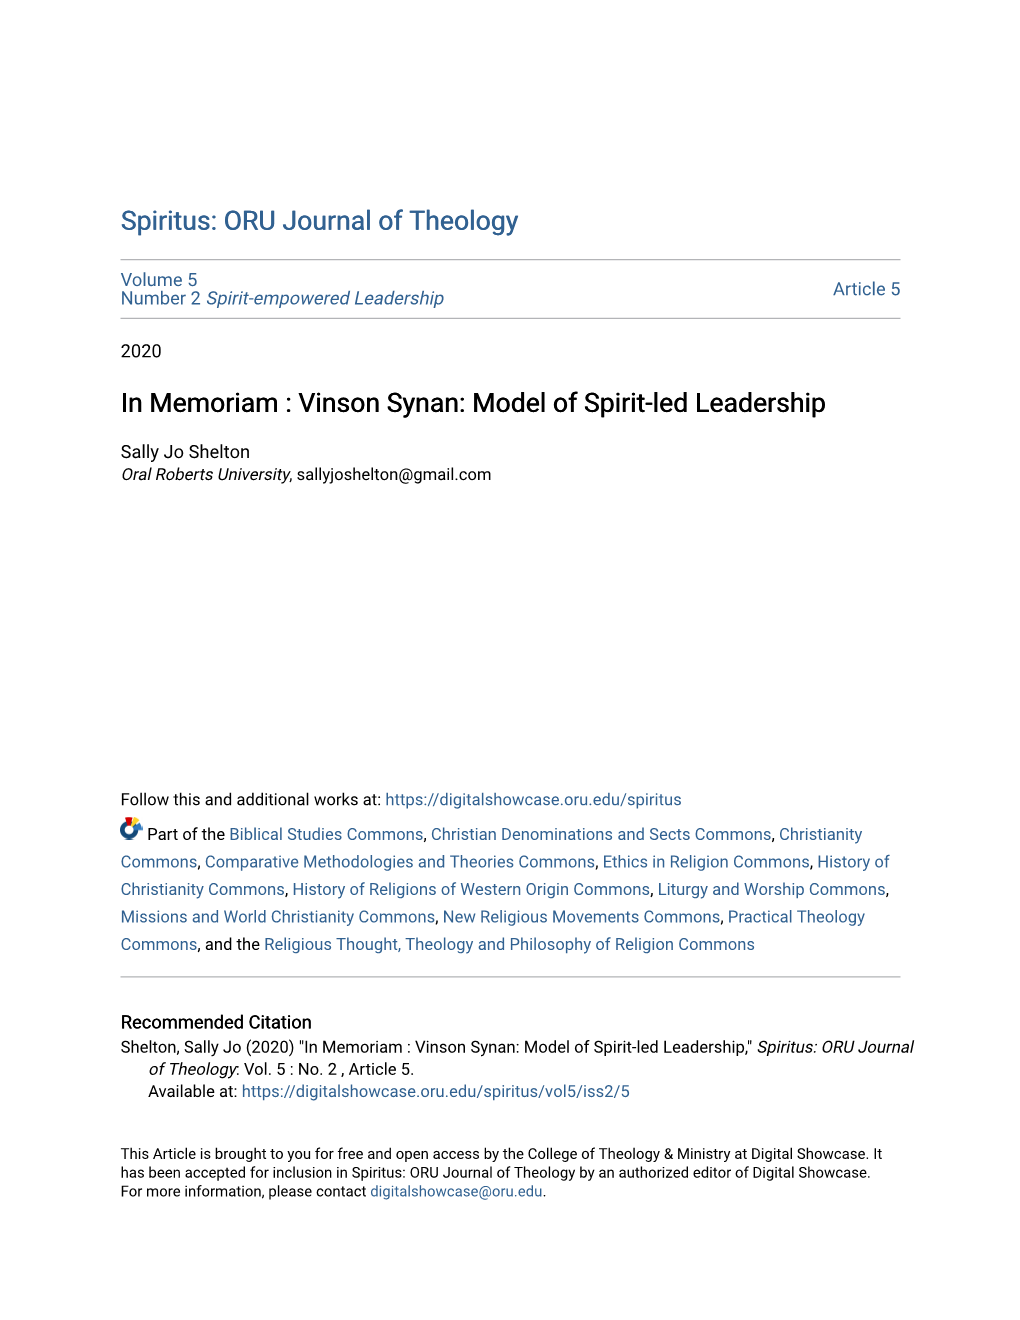 Vinson Synan: Model of Spirit-Led Leadership